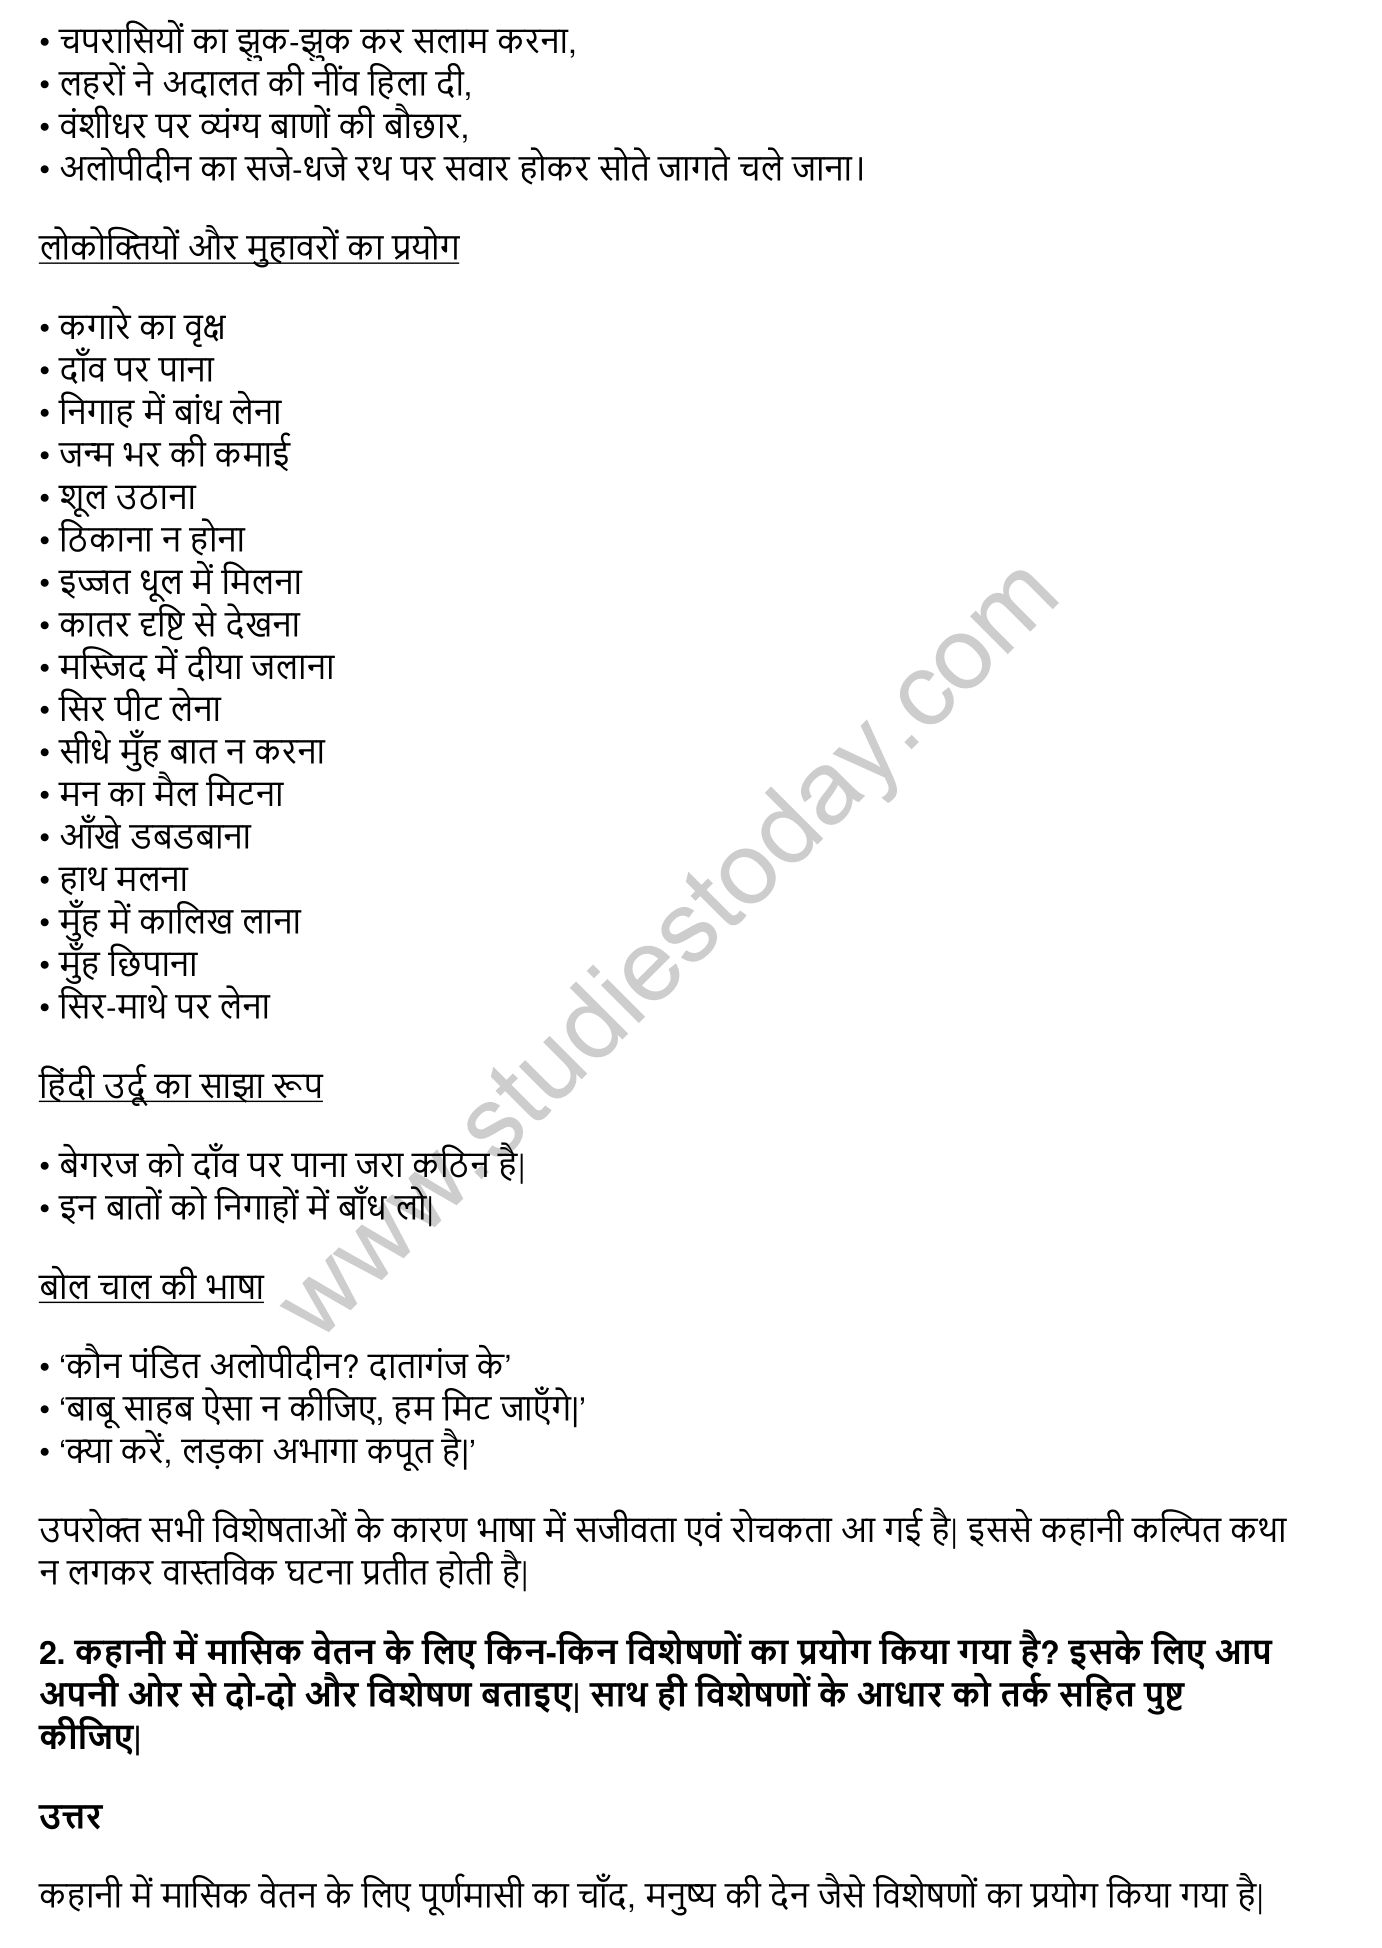 NCERT-Solutions-Class-11-Hindi-Aroh-Prem-Chand-7